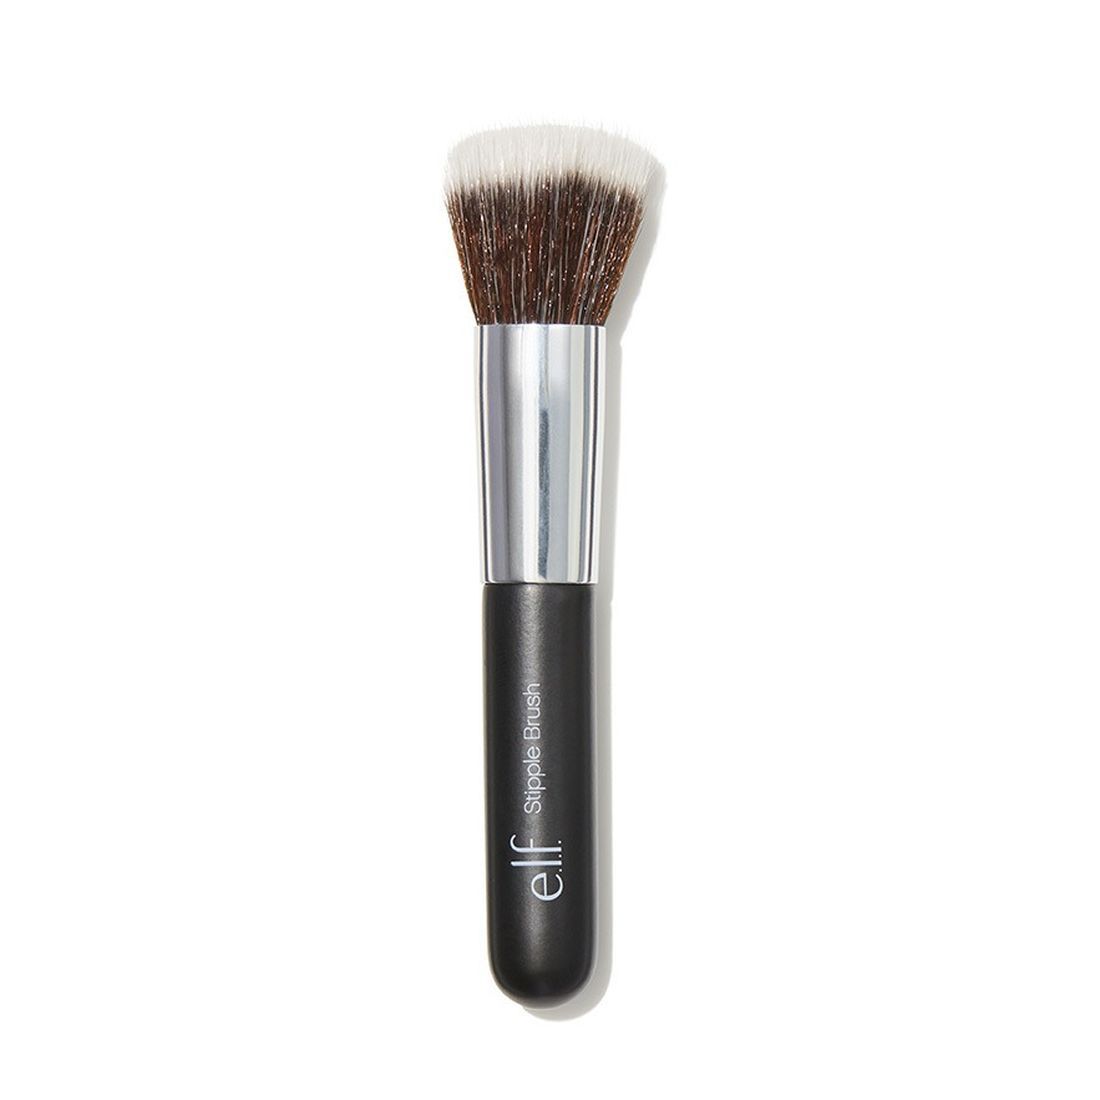 best makeup brush for powder foundation